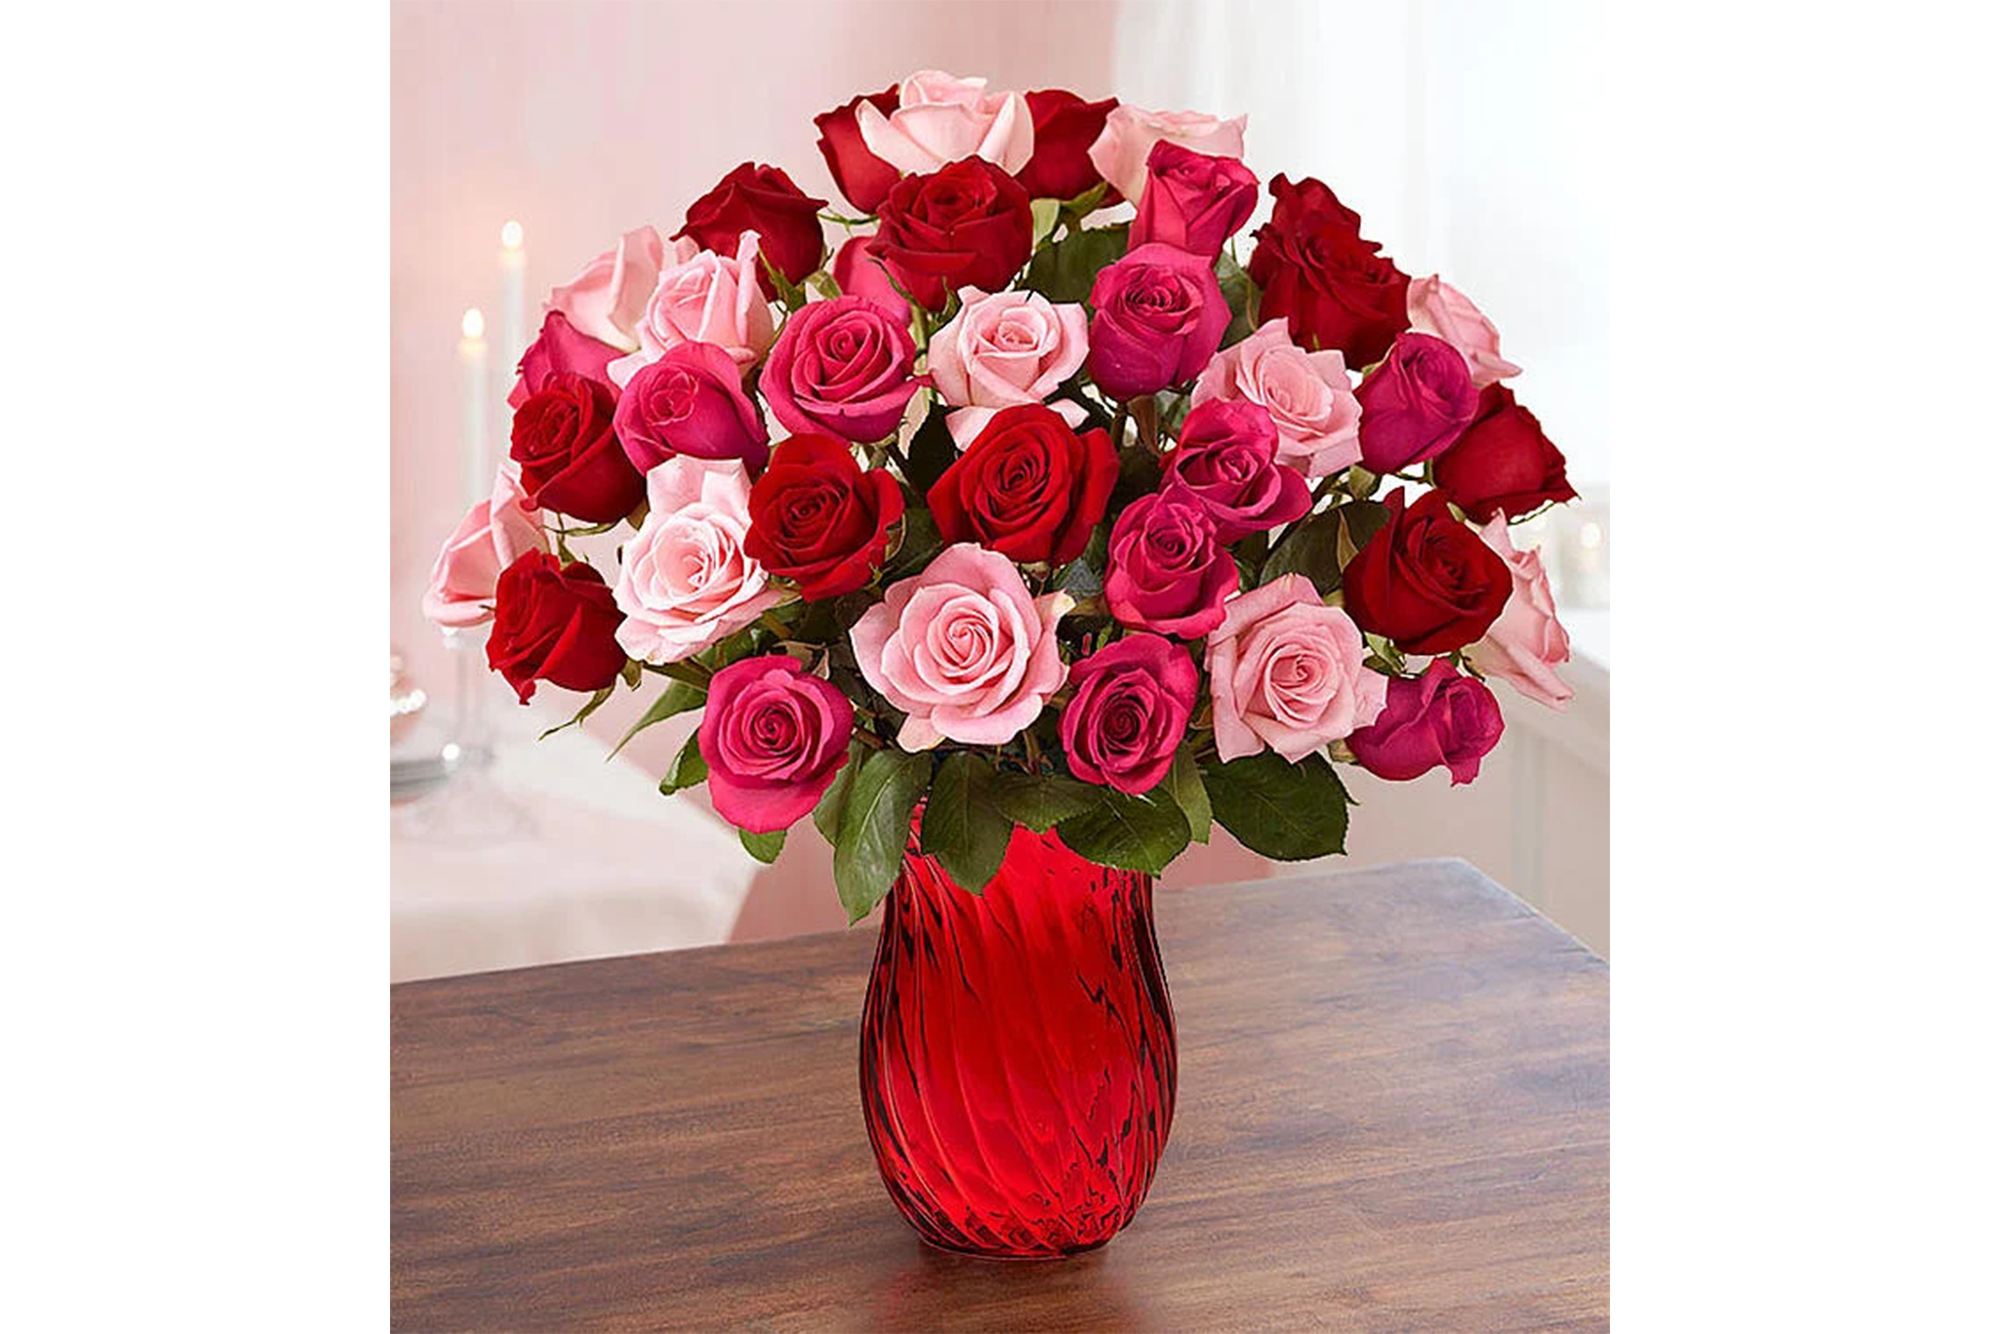 Enchanted Rose Medley Bouquet, 36 Stems, 36 Stems
